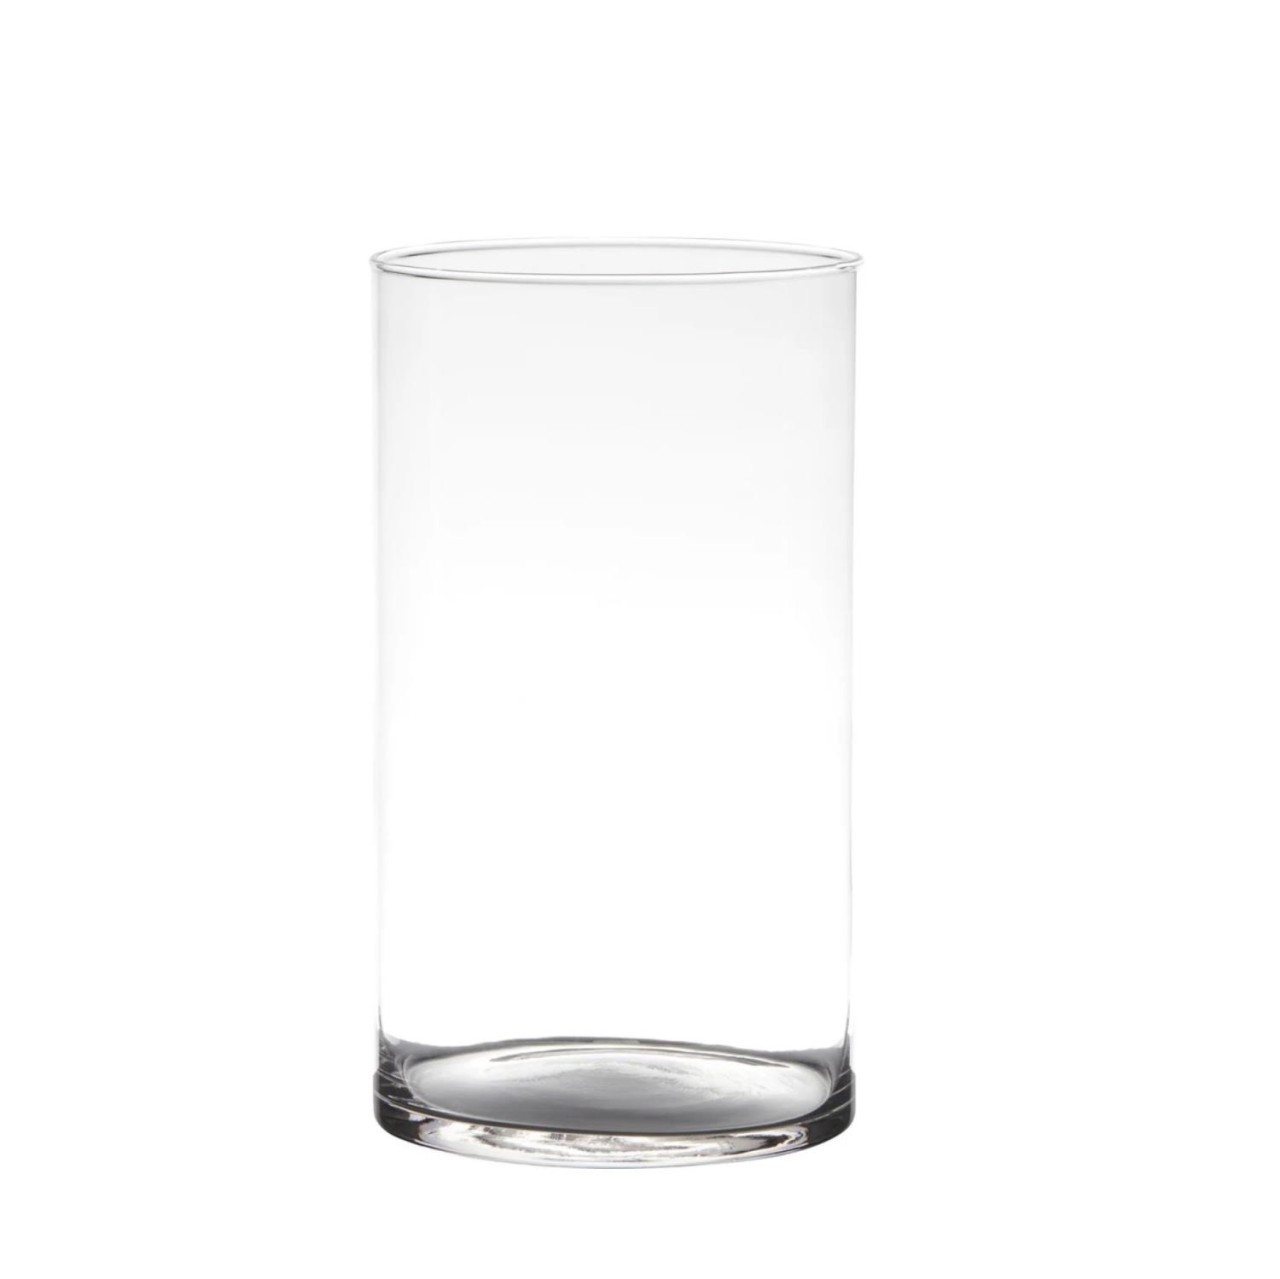 Hakbijl Glass Deko-Glas, Transparent H:21cm D:13.5cm Glas von Hakbijl Glass